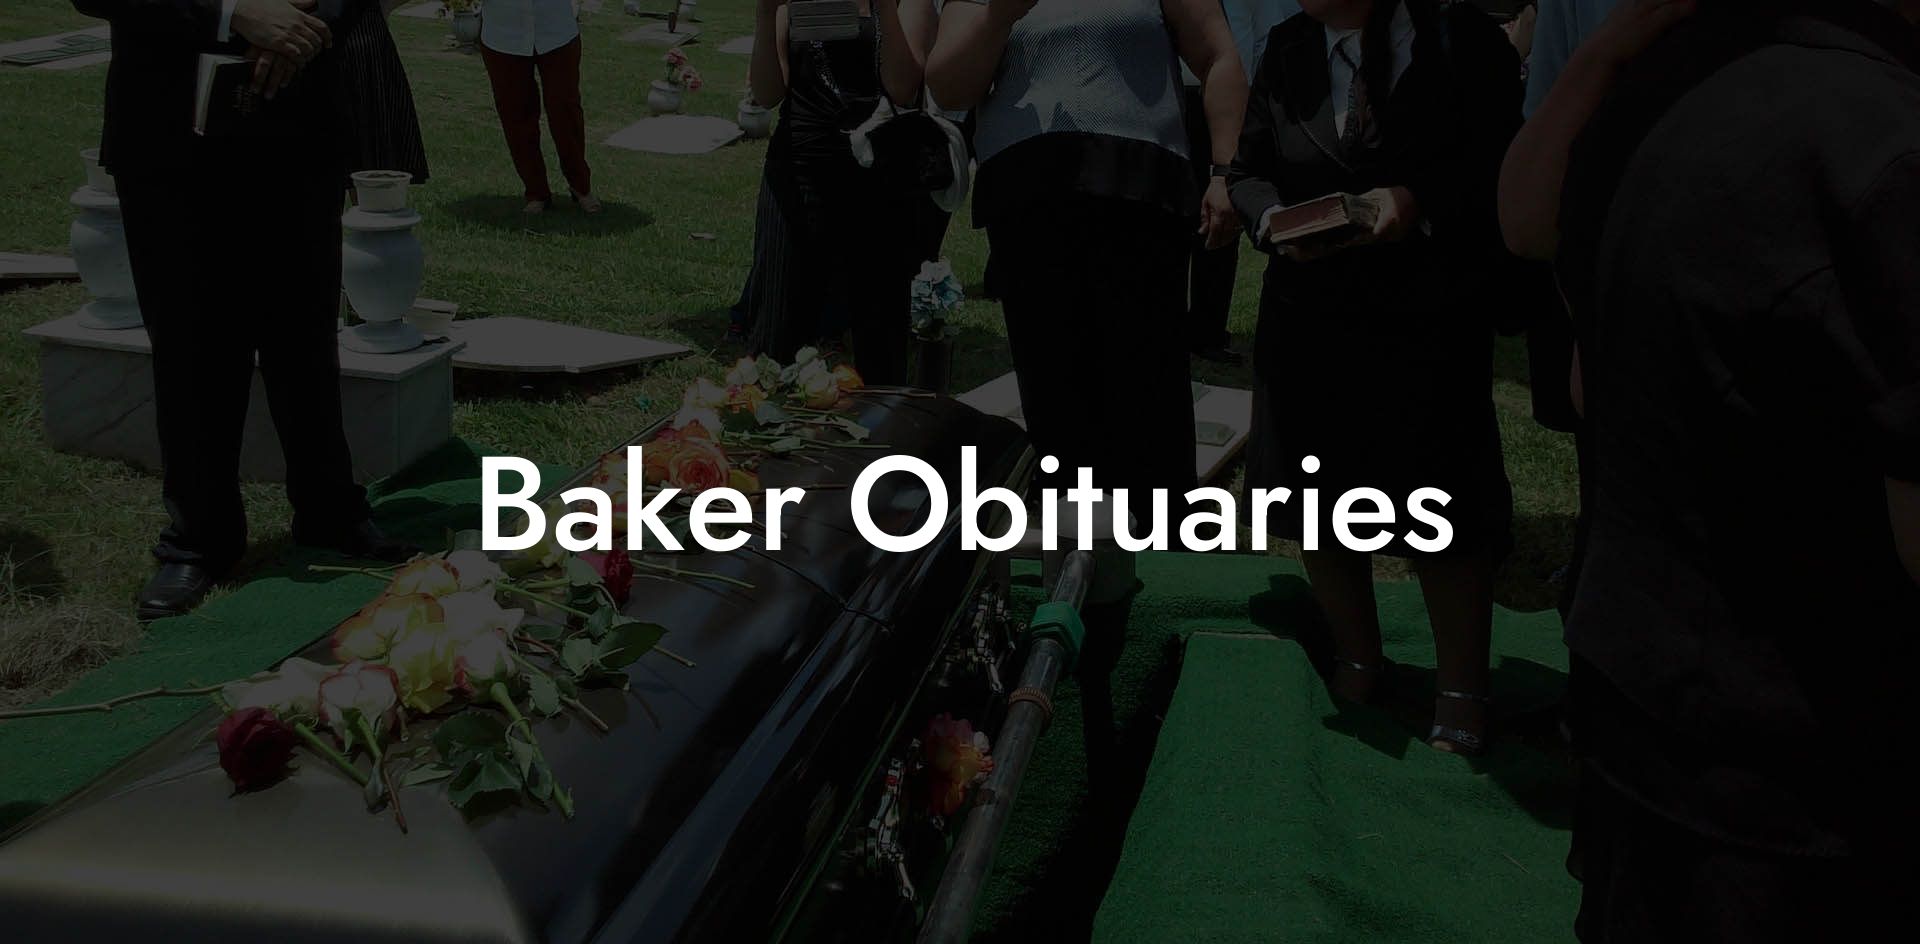 Baker Obituaries